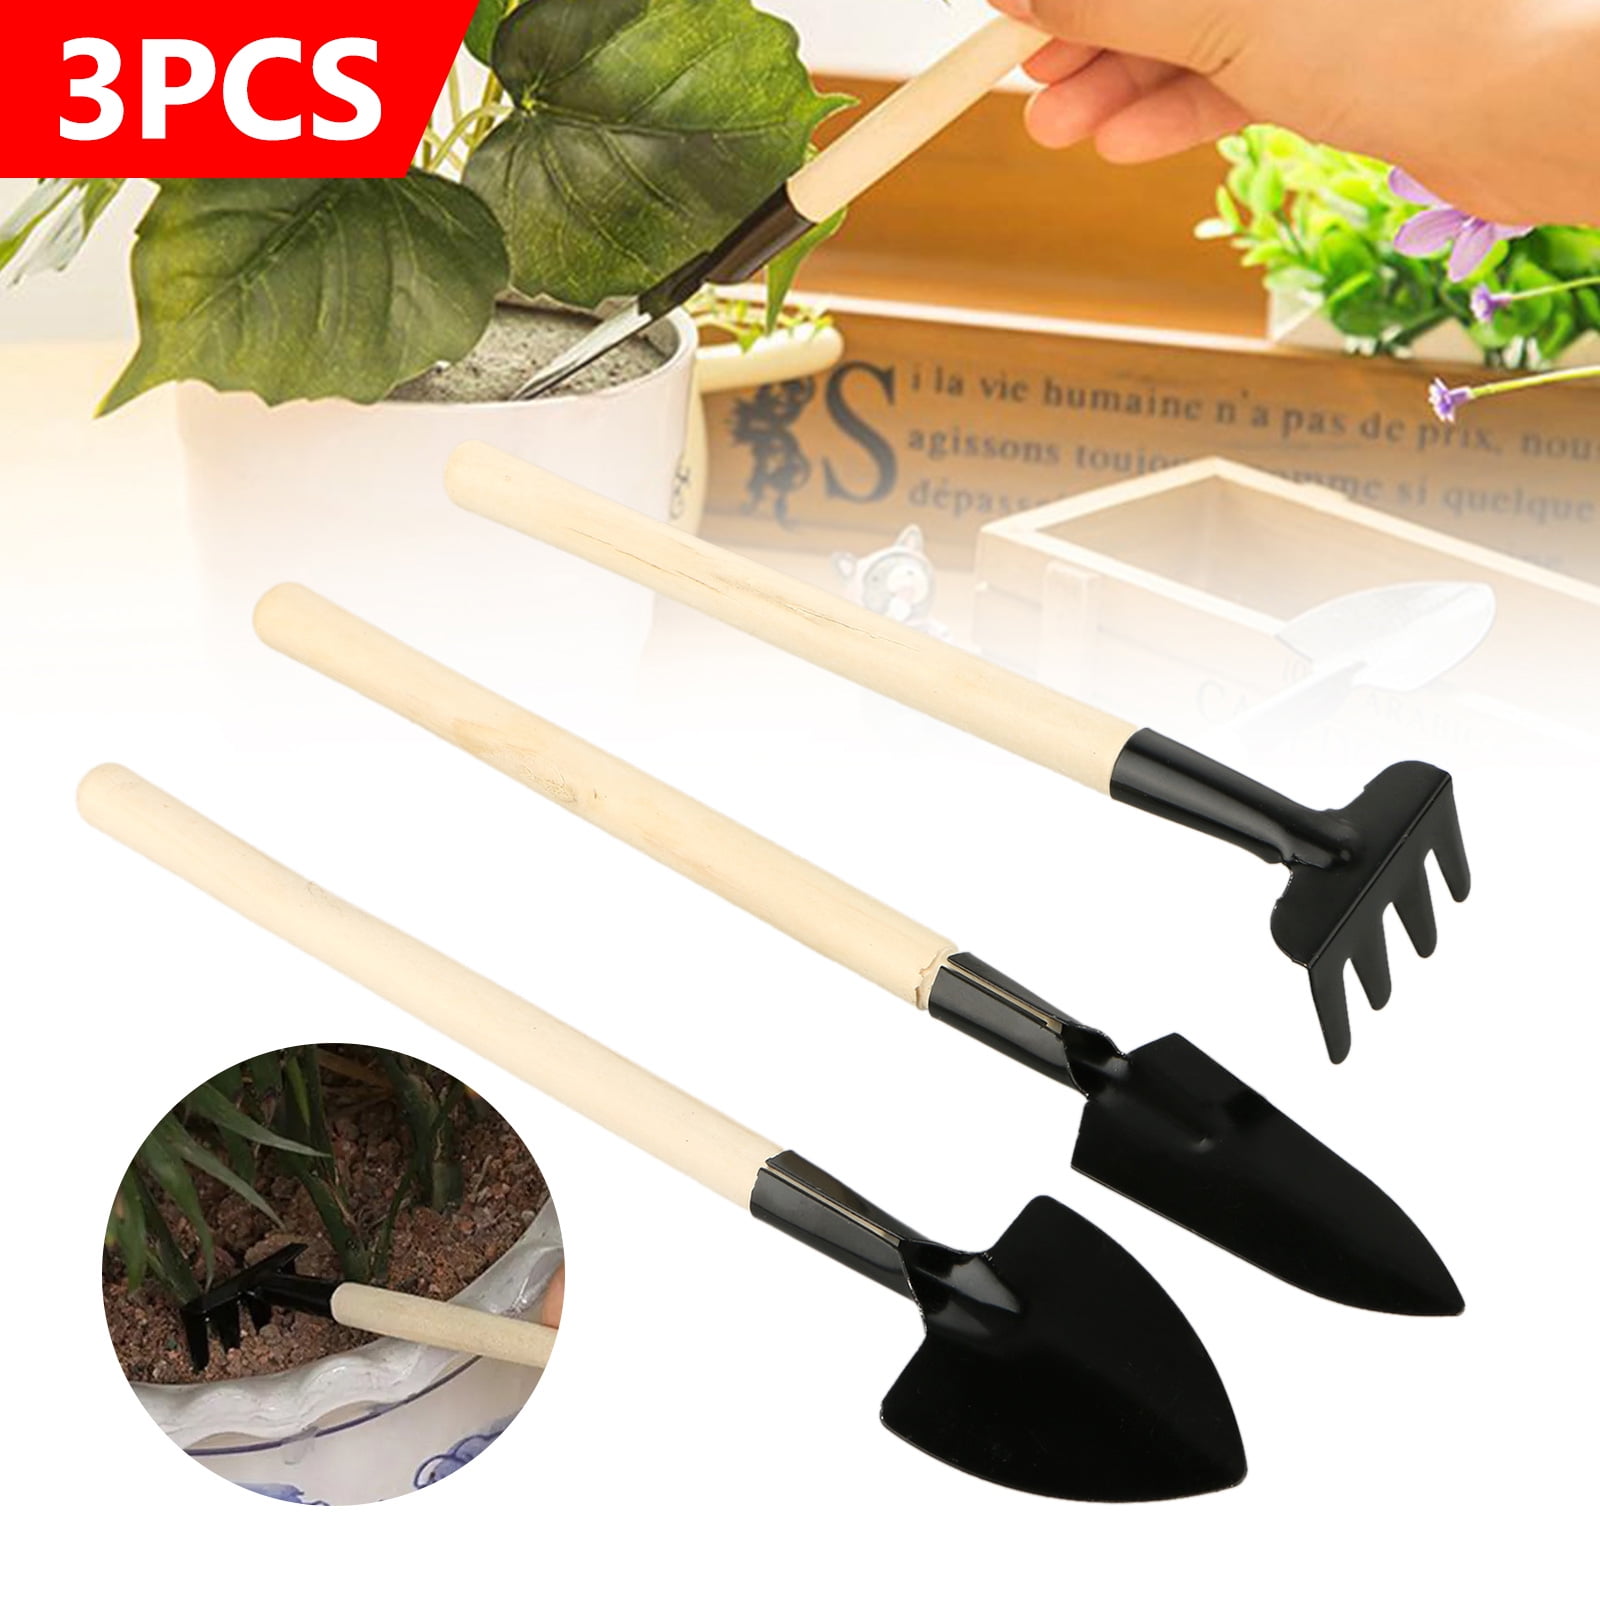 3pcs Mini Garden Gardening Plant Tools Set with Wooden Handle Shovel Rake Spade 